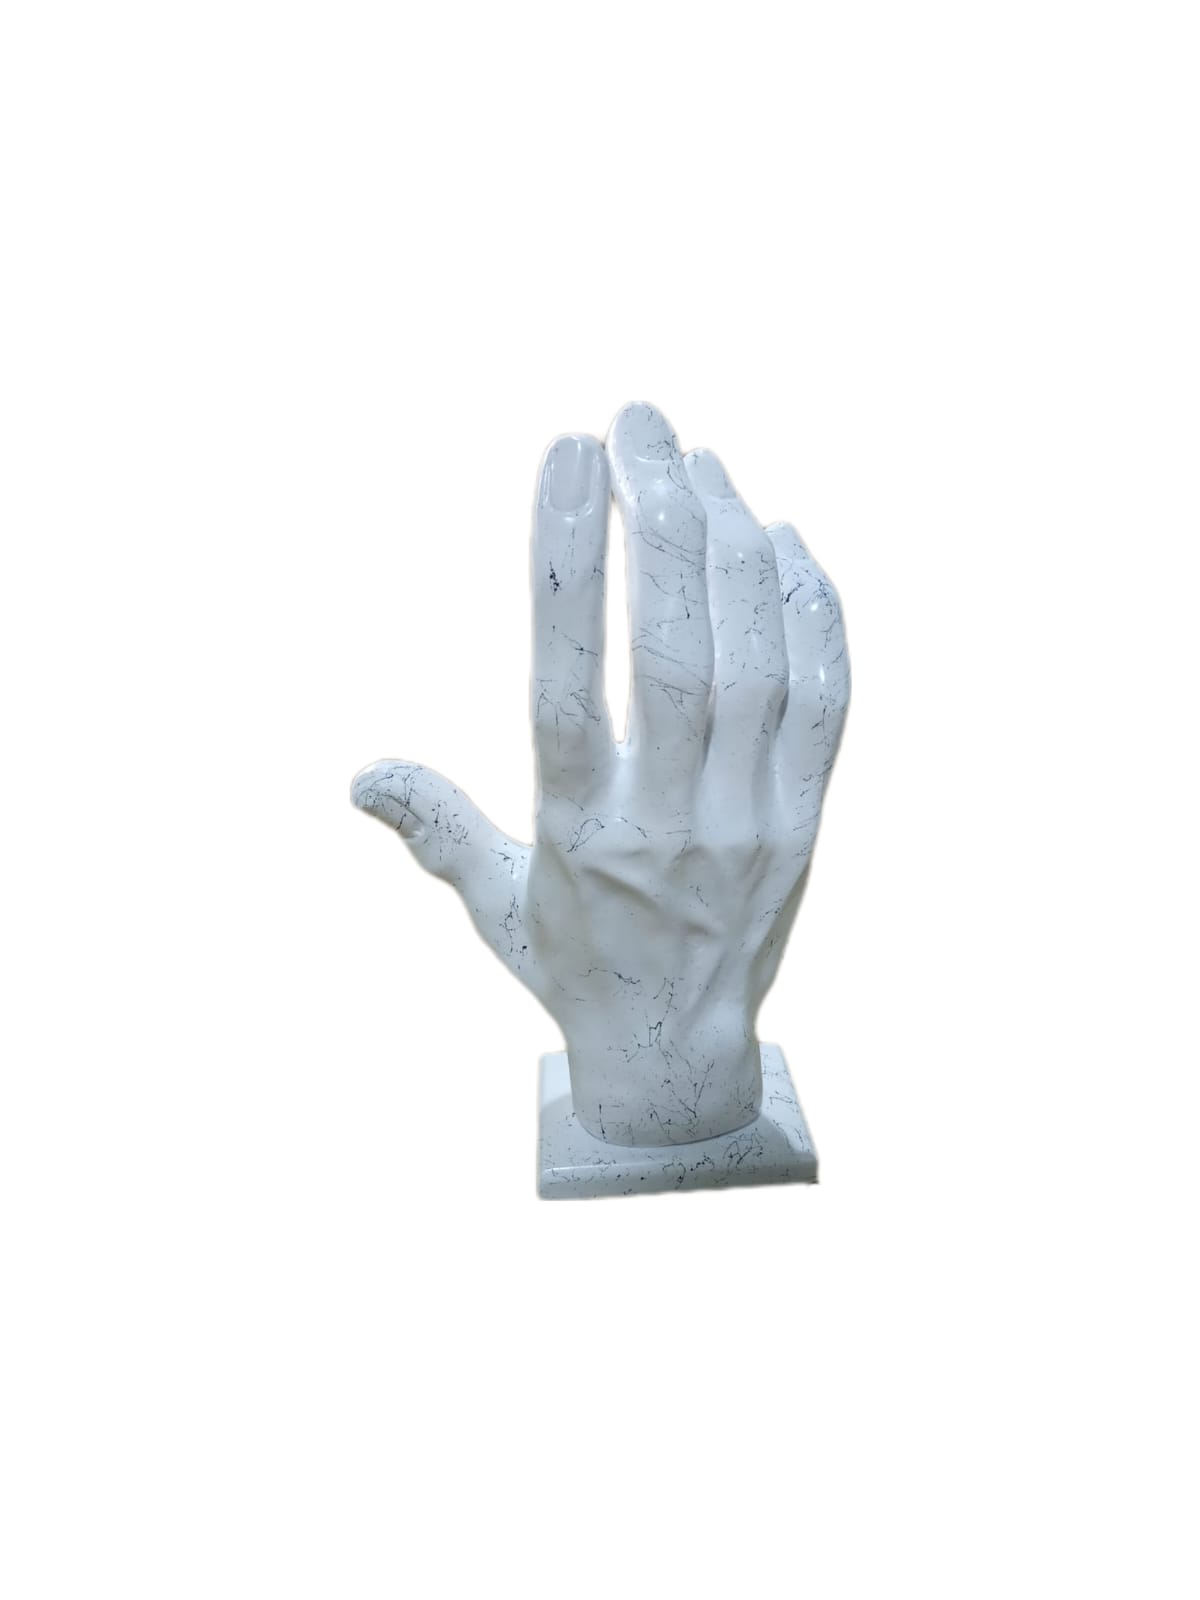 Skulptur Hand Weiß Marmoroptik